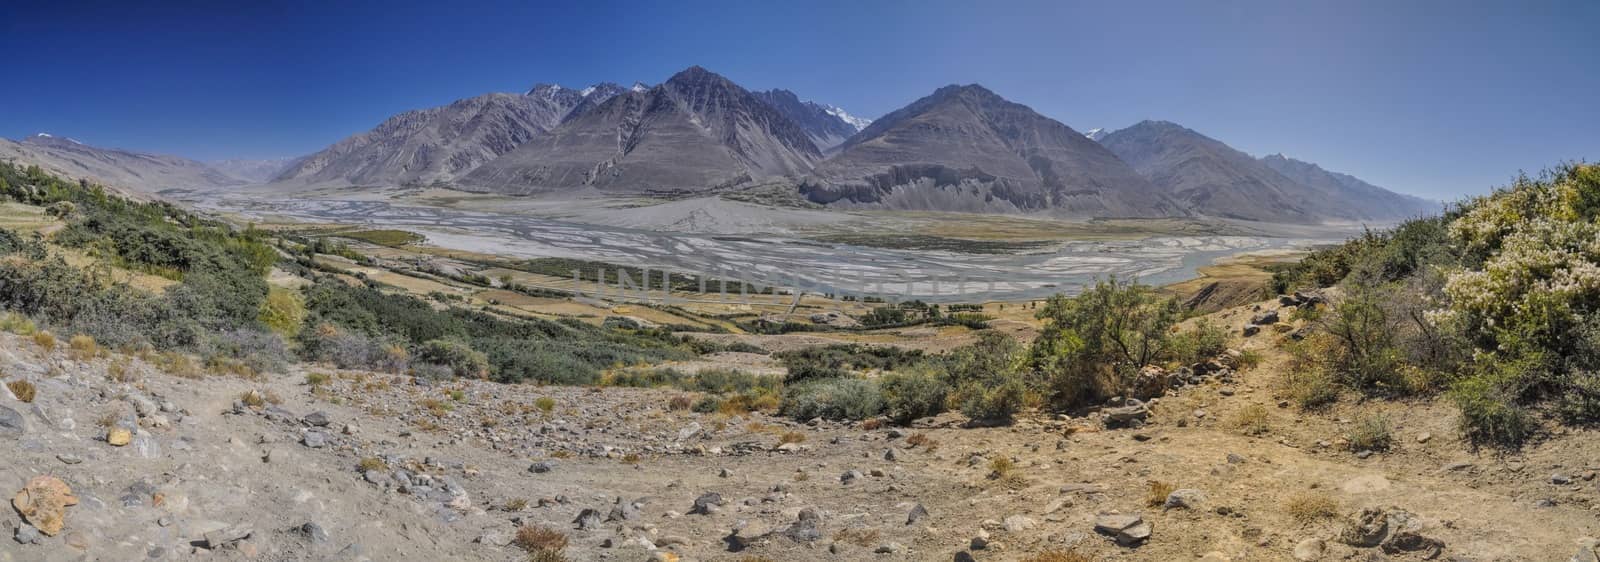 Tajikistan panorama by MichalKnitl